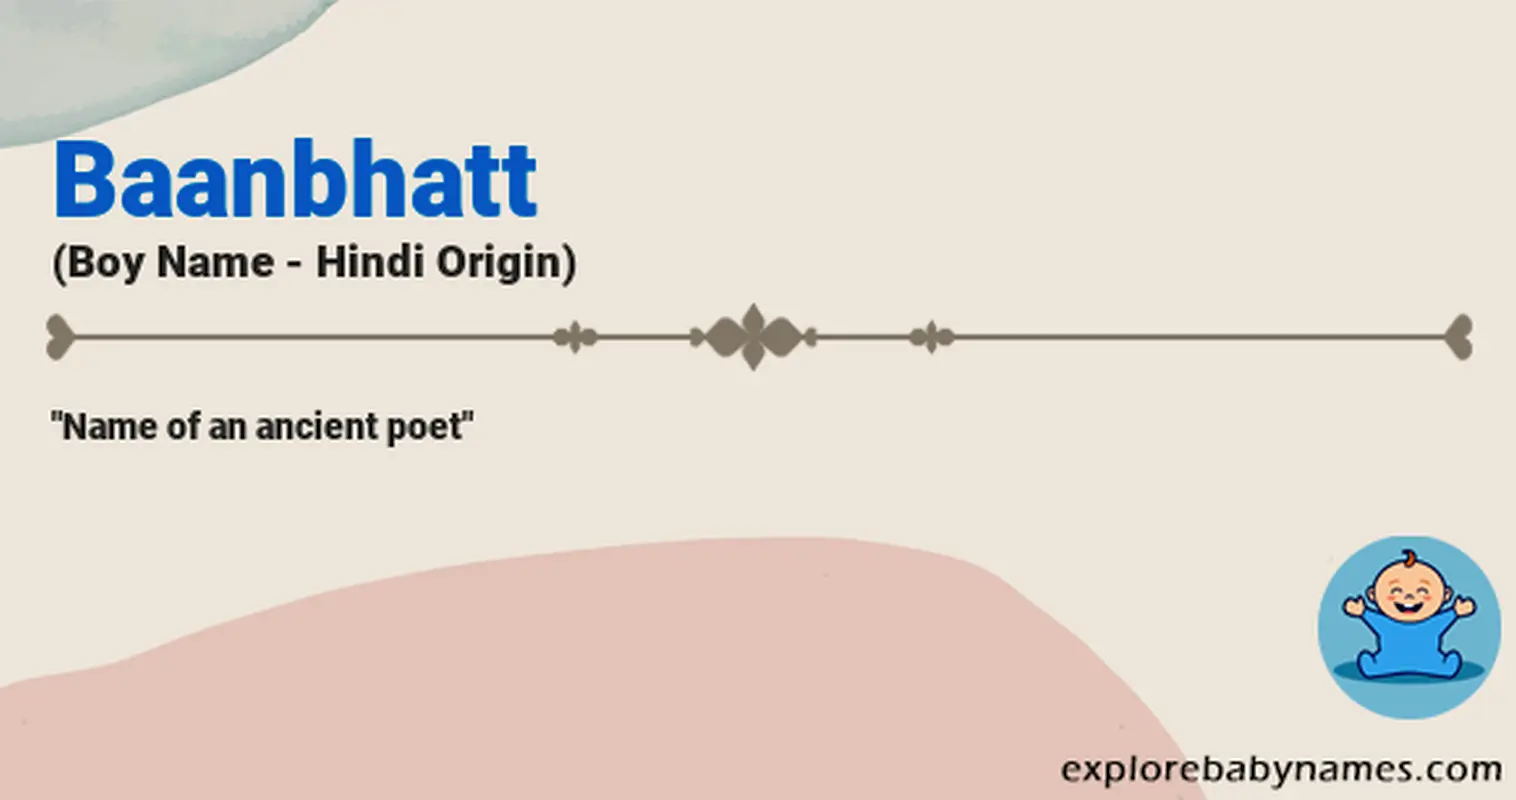 Meaning of Baanbhatt